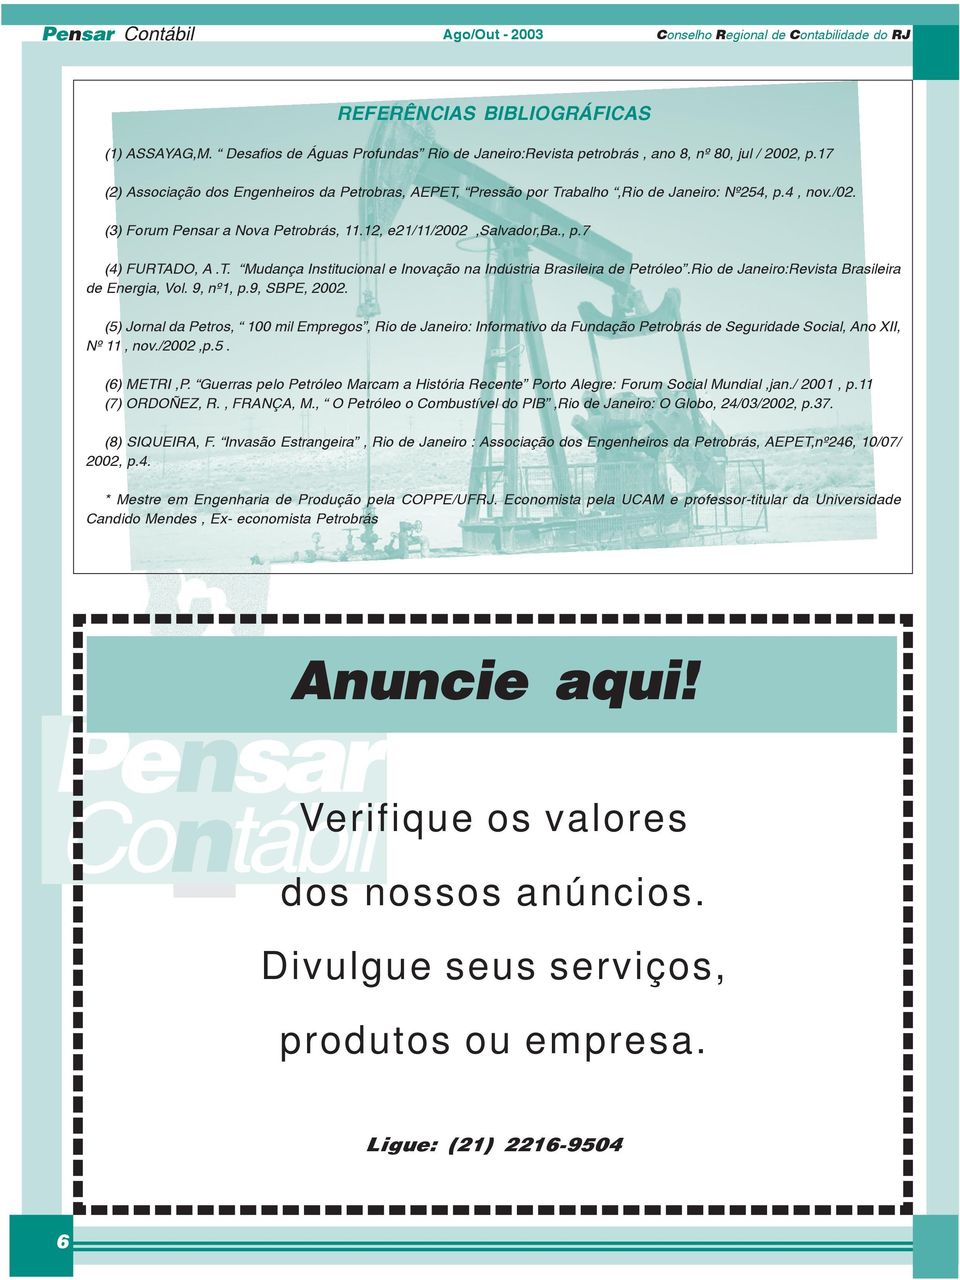 Rio de Janeiro:Revista Brasileira de Energia, Vol. 9, nº1, p.9, SBPE, 2002.